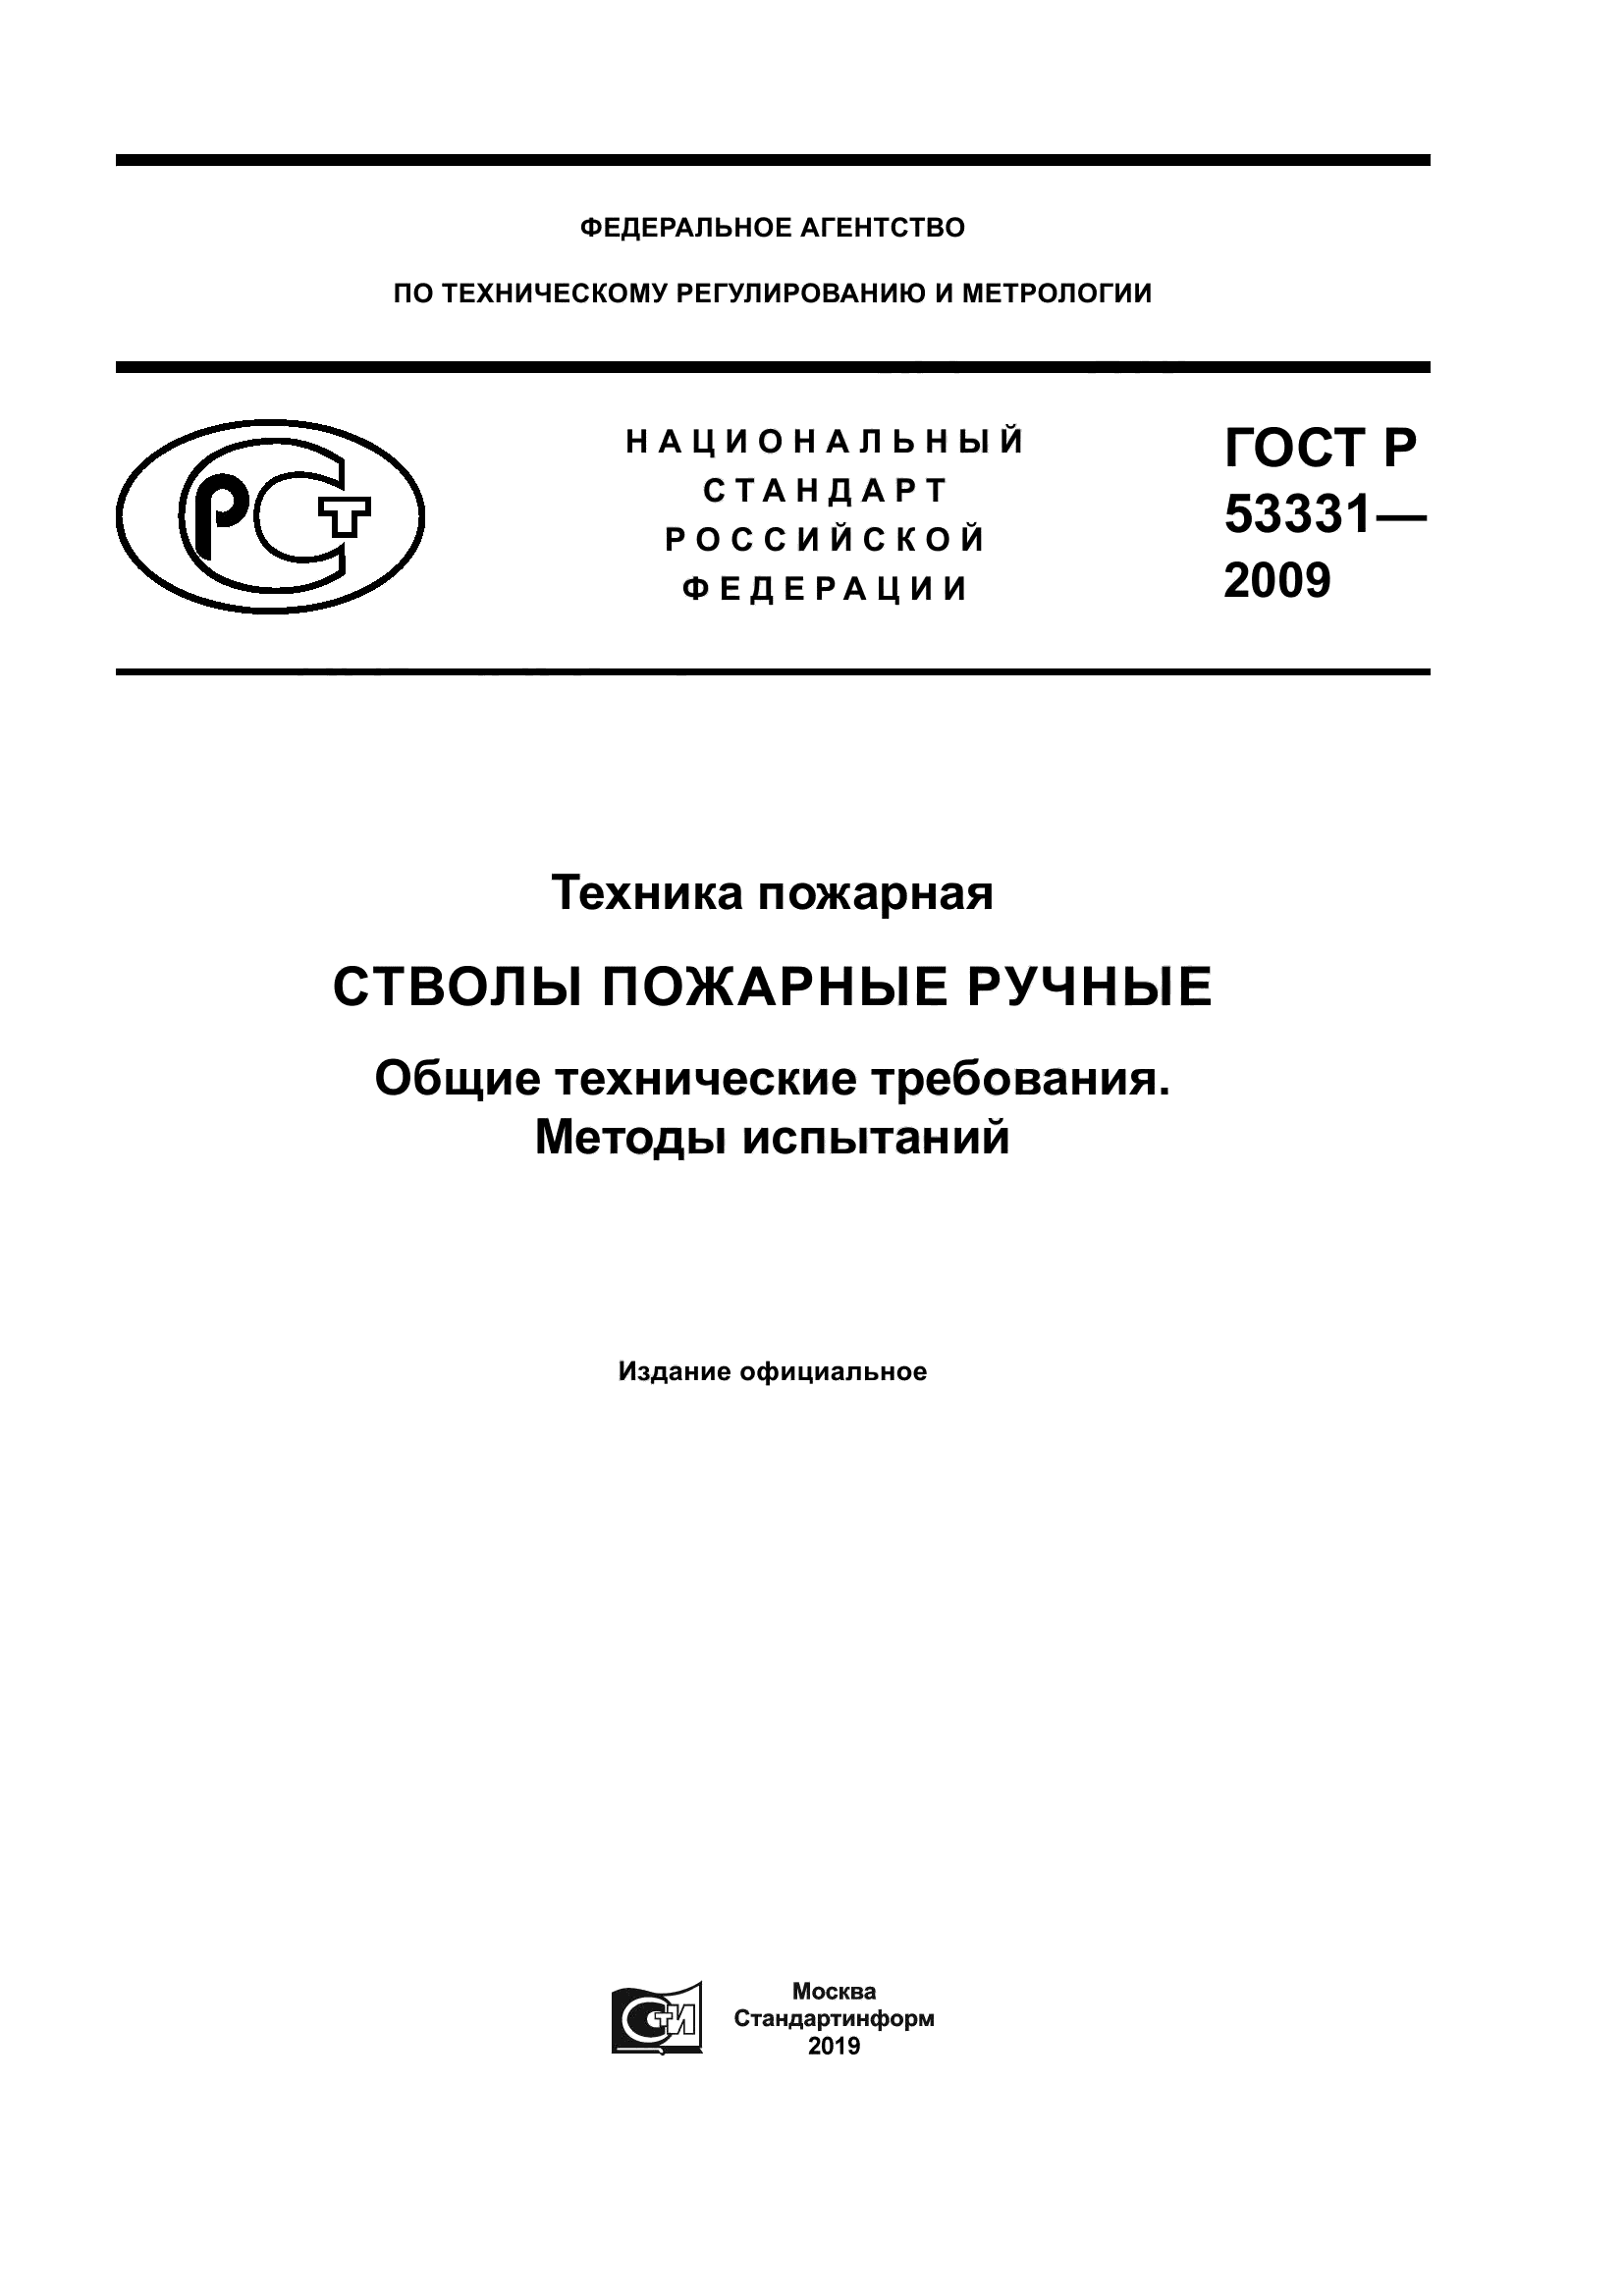 ГОСТ Р 53331-2009